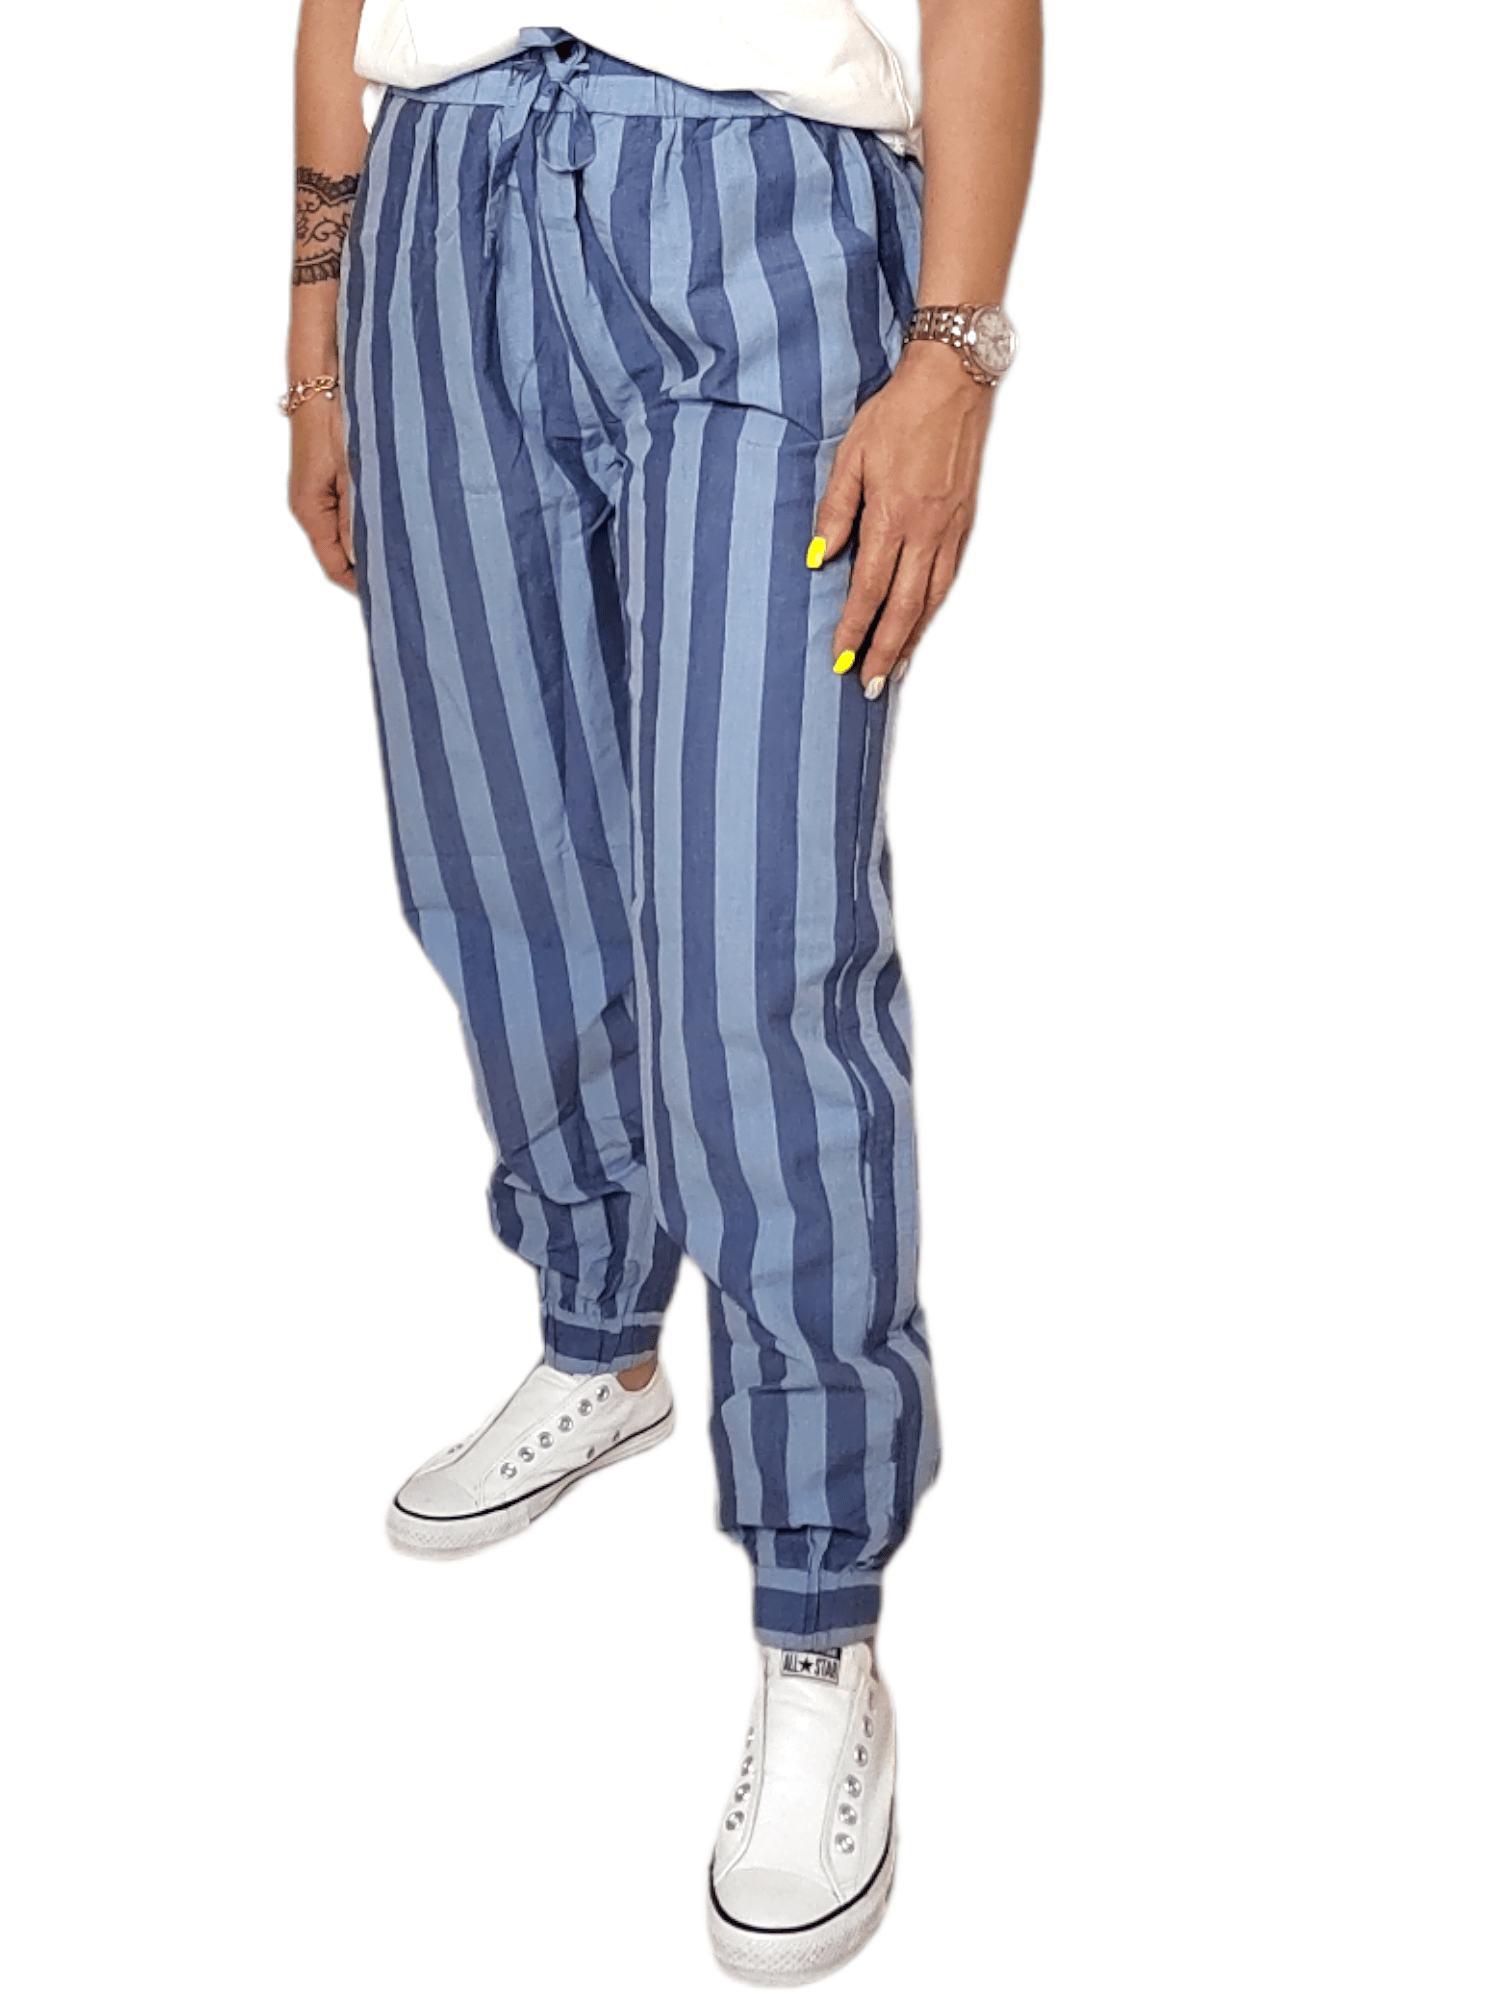 ElOutlet - Summer Women Pants Women Pants [3] -  striped